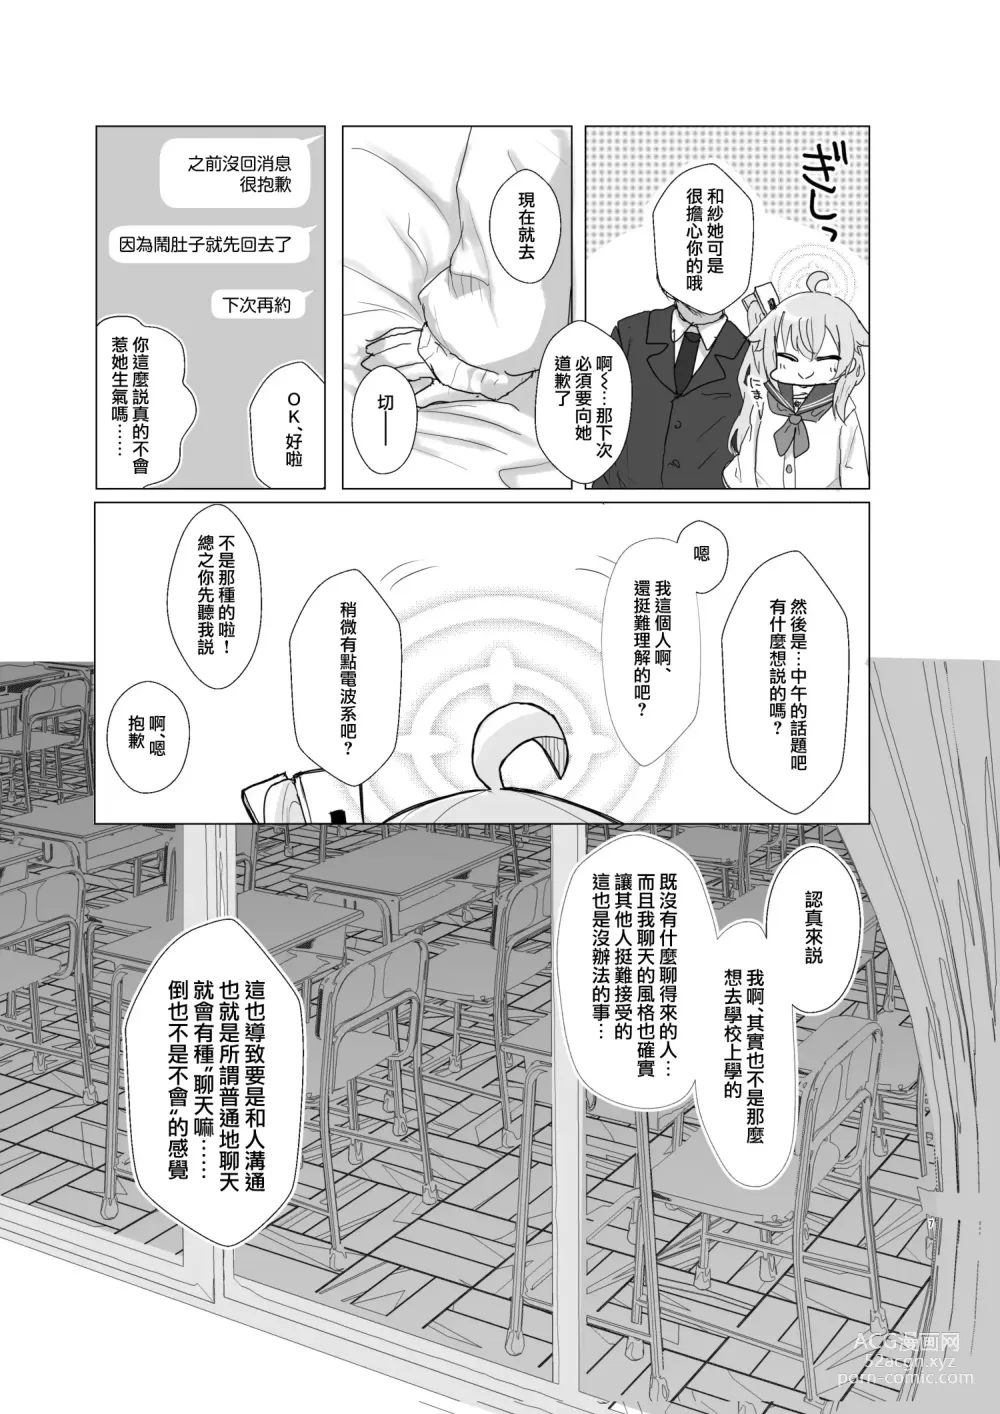 Page 9 of doujinshi 無論怎樣悲傷只要有甜點就足以緩和。